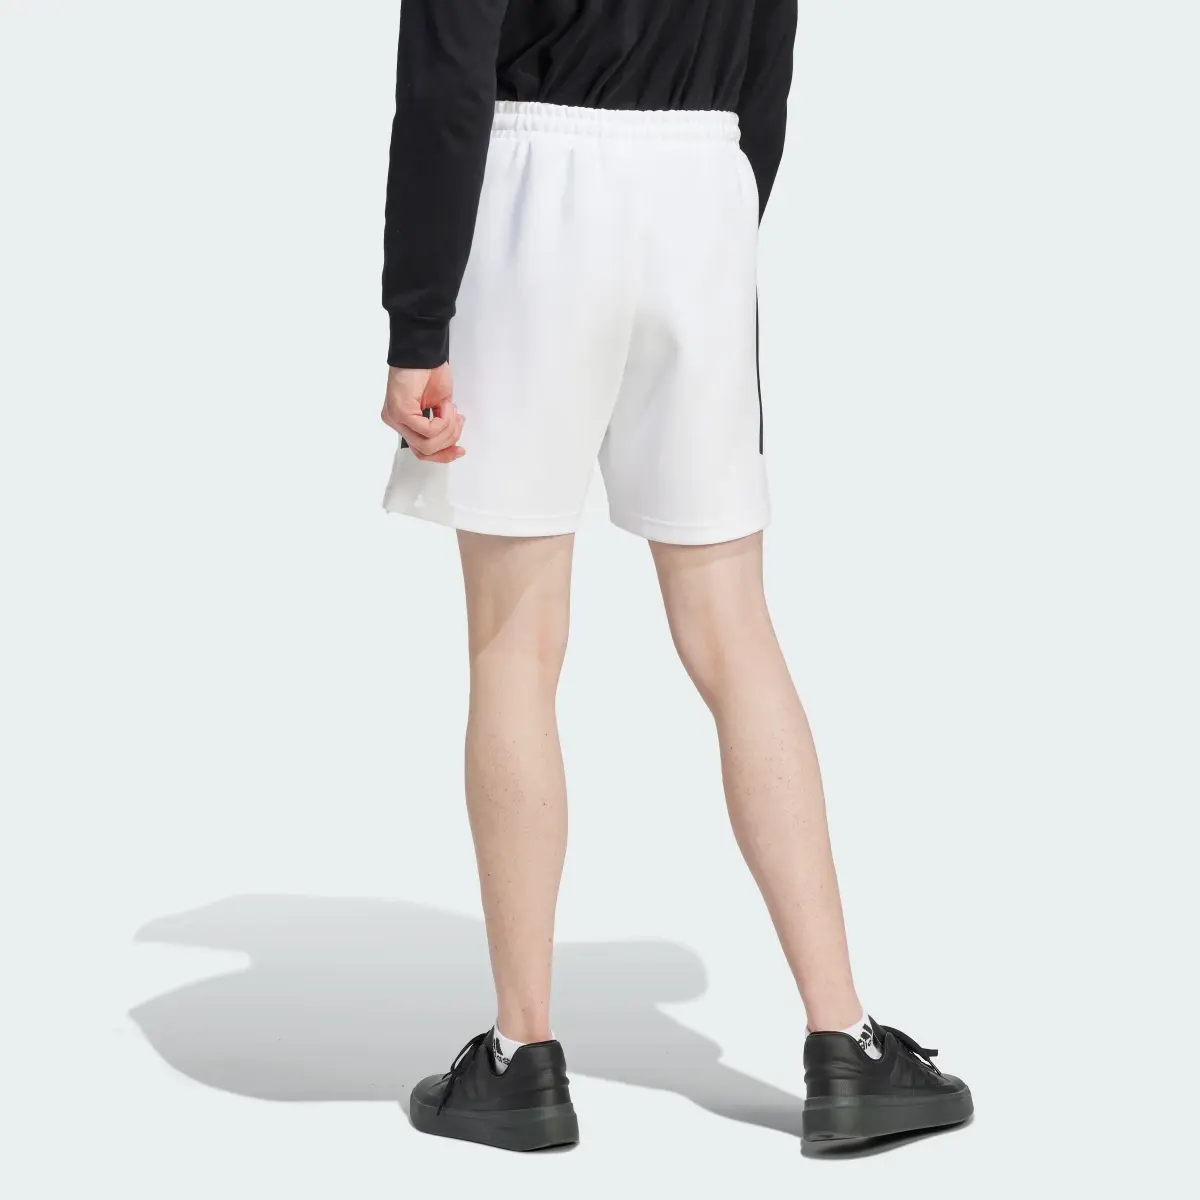 Adidas Future Icons 3-Stripes Shorts. 3